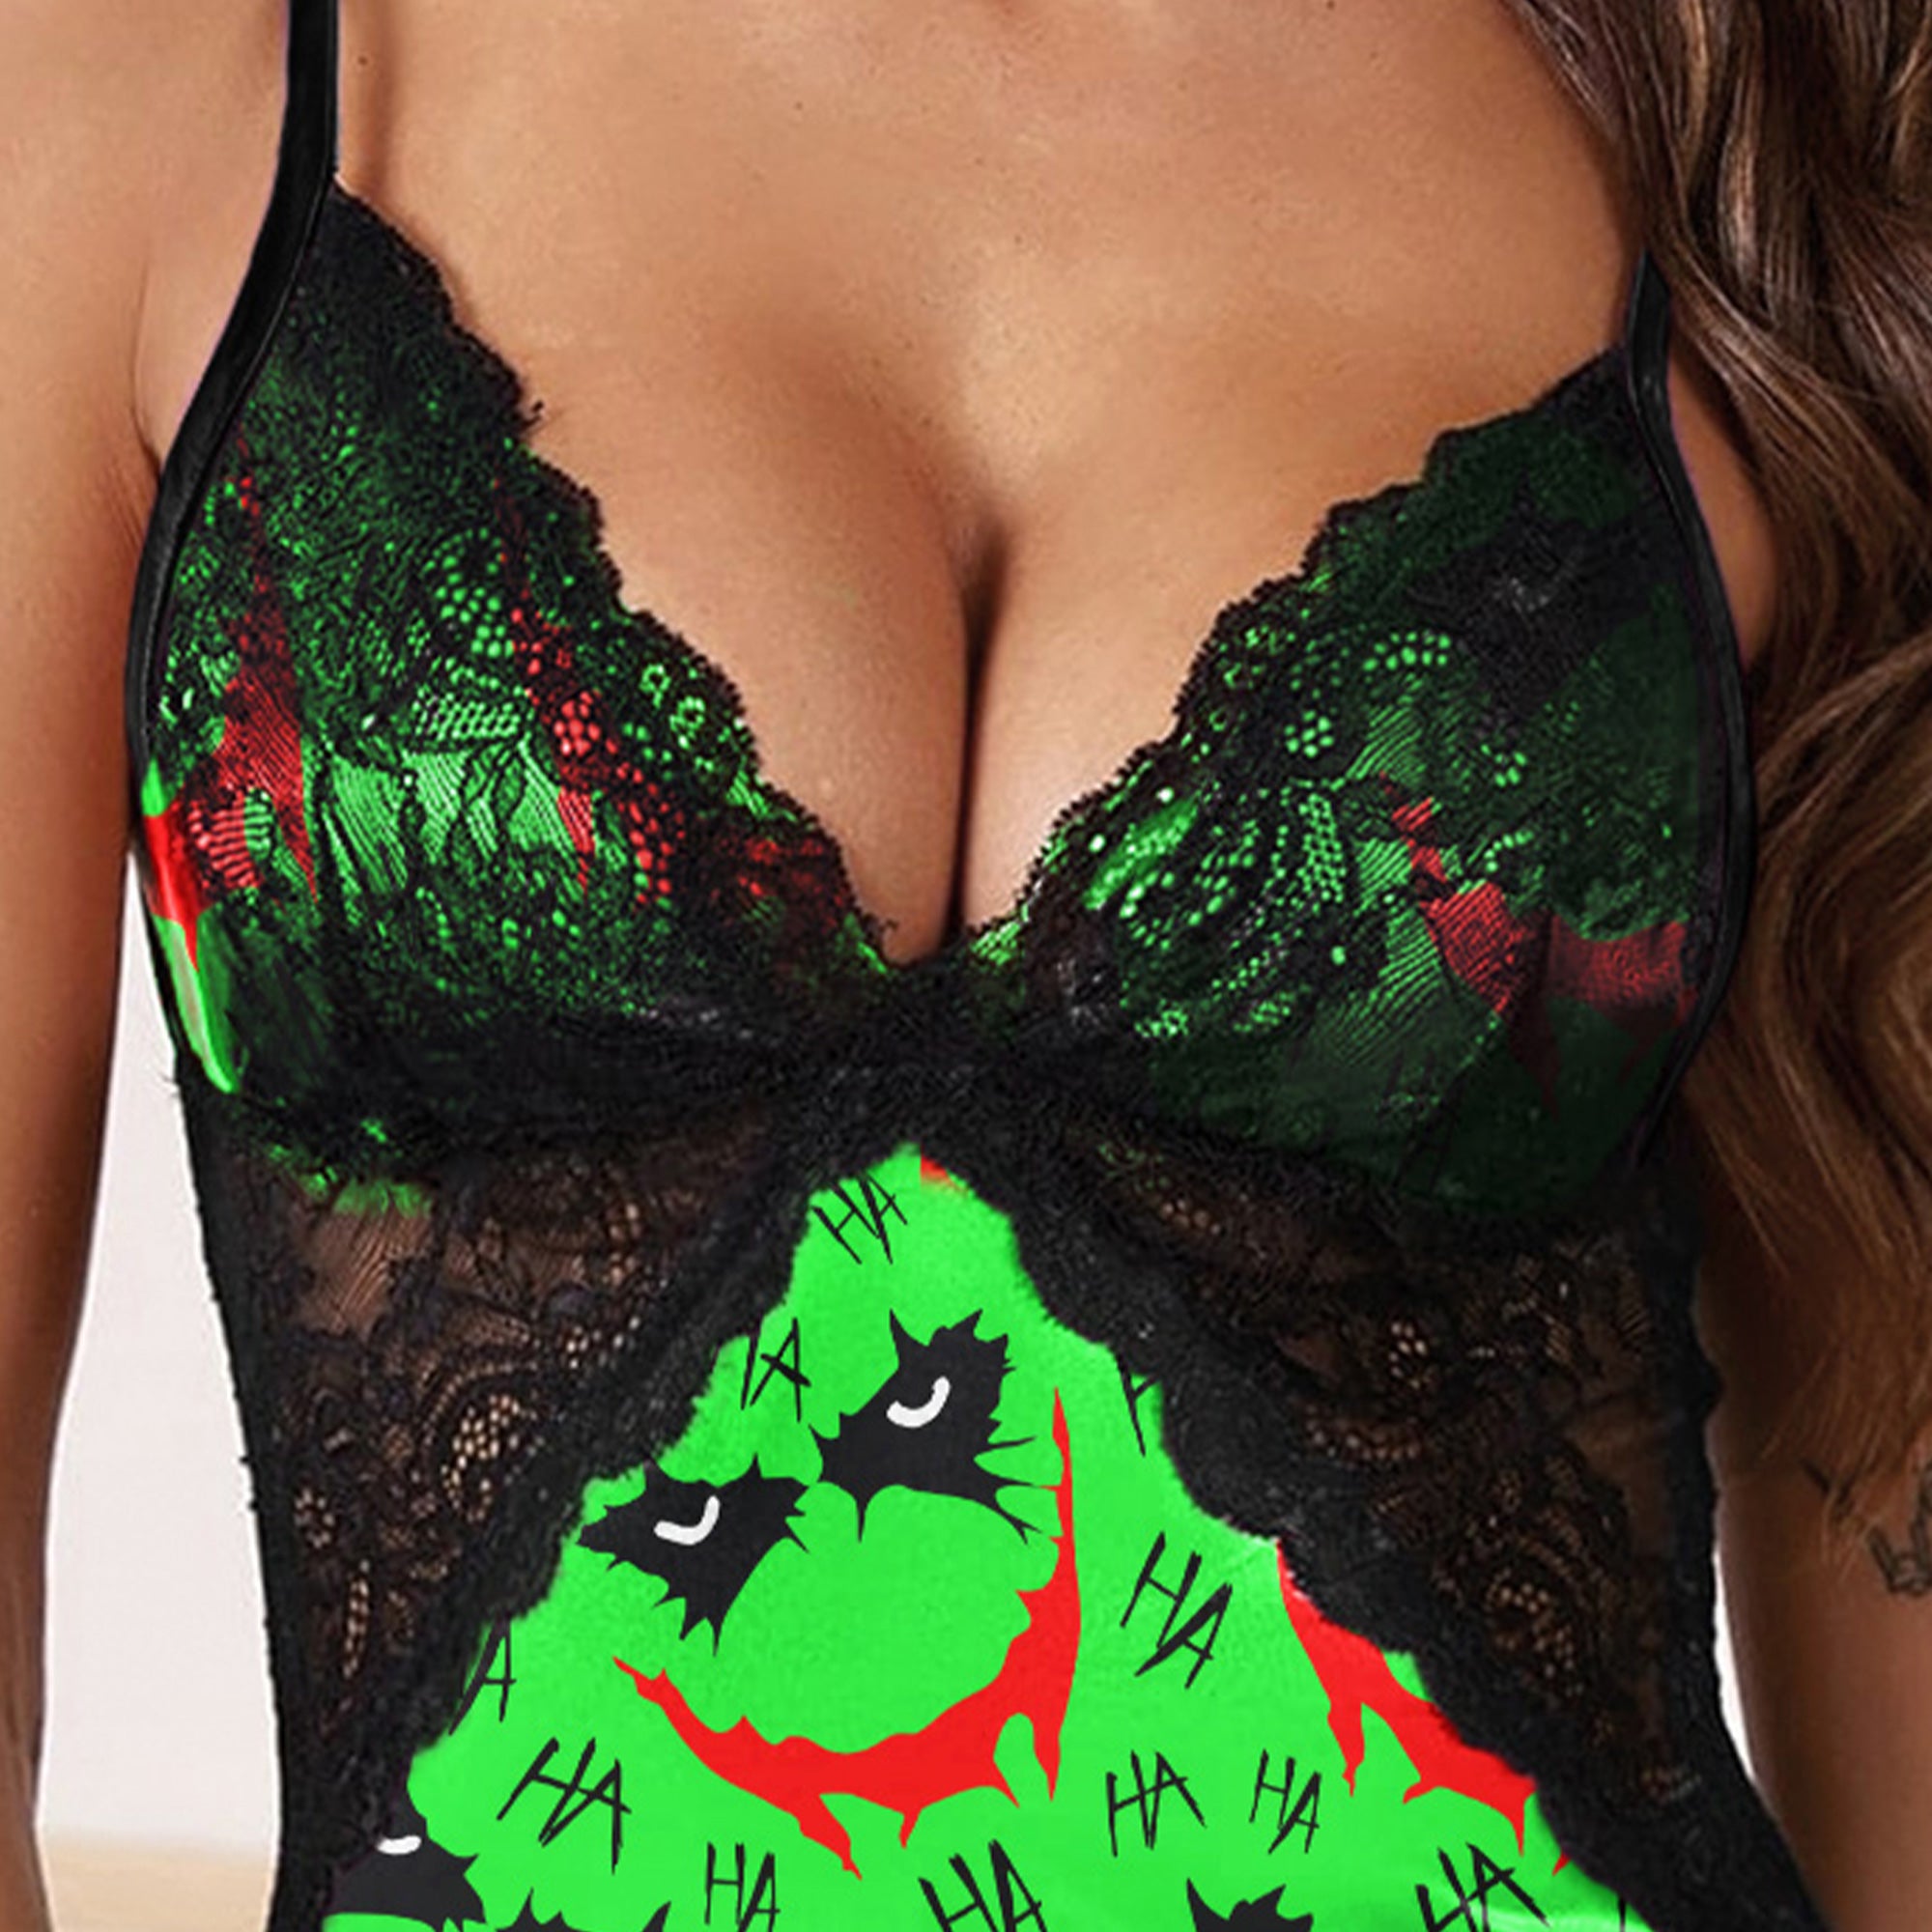 Green Smile Horror Gothic & Punkrock Women's Sleepwear | Lace Cami Dress Nightgowns